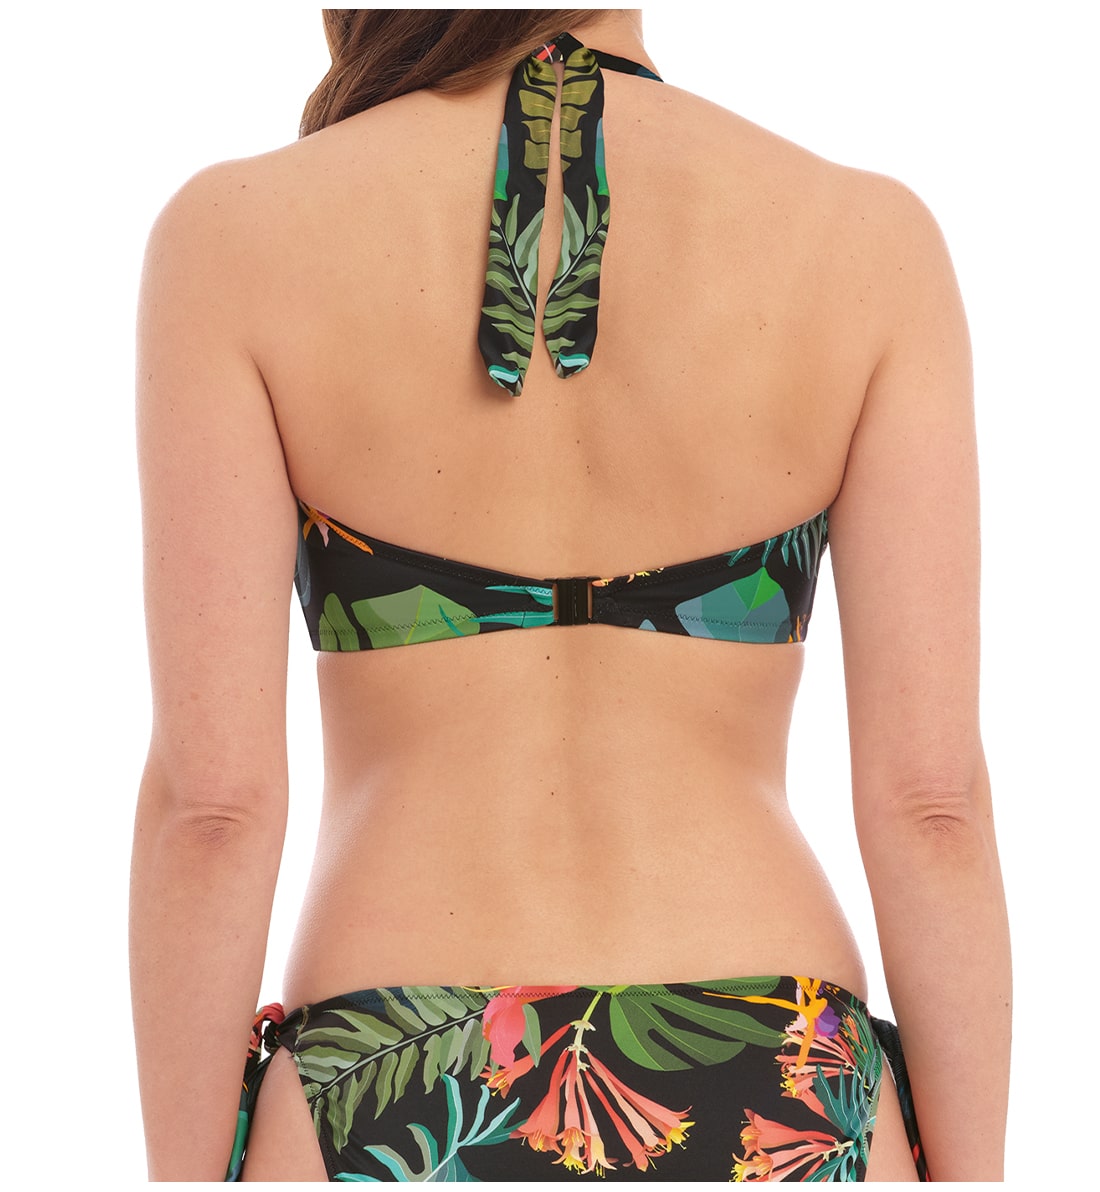 Fantasie Monteverde Padded Twist Bandeau Bikini Top (500709),30FF,Black - Black,30FF